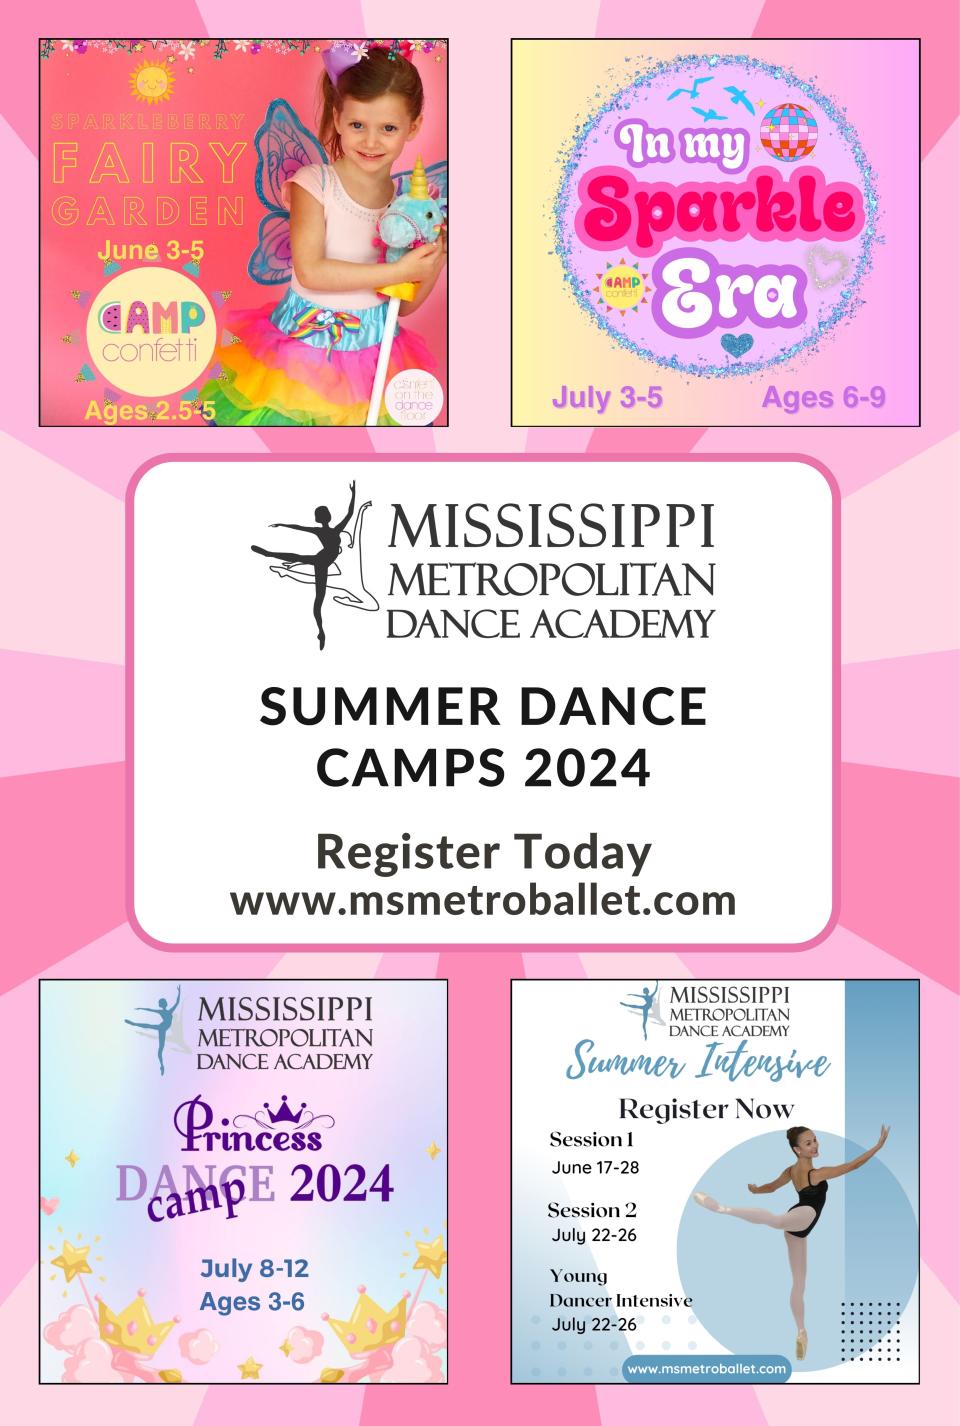 Mississippi Metropolitan Dance Academy Summer Dance 2024 camp flyer.